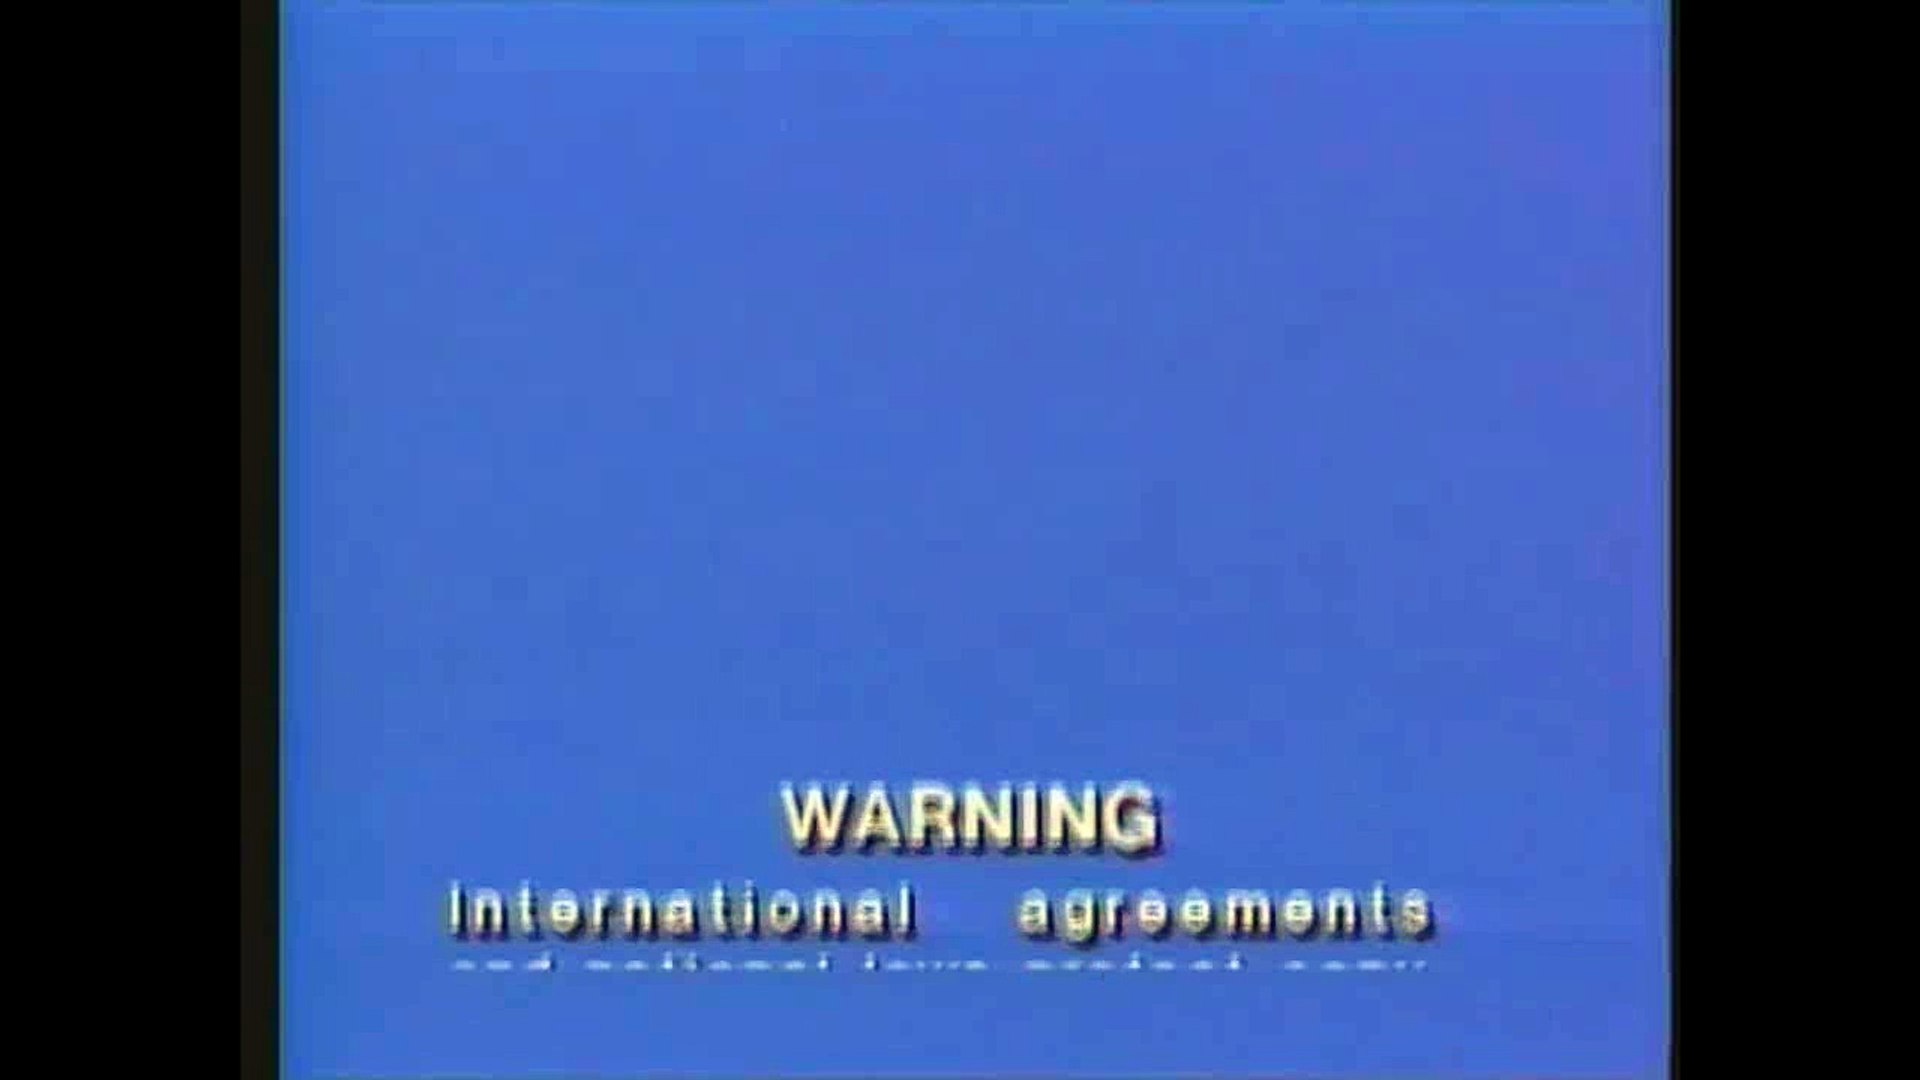 interpol warning screen